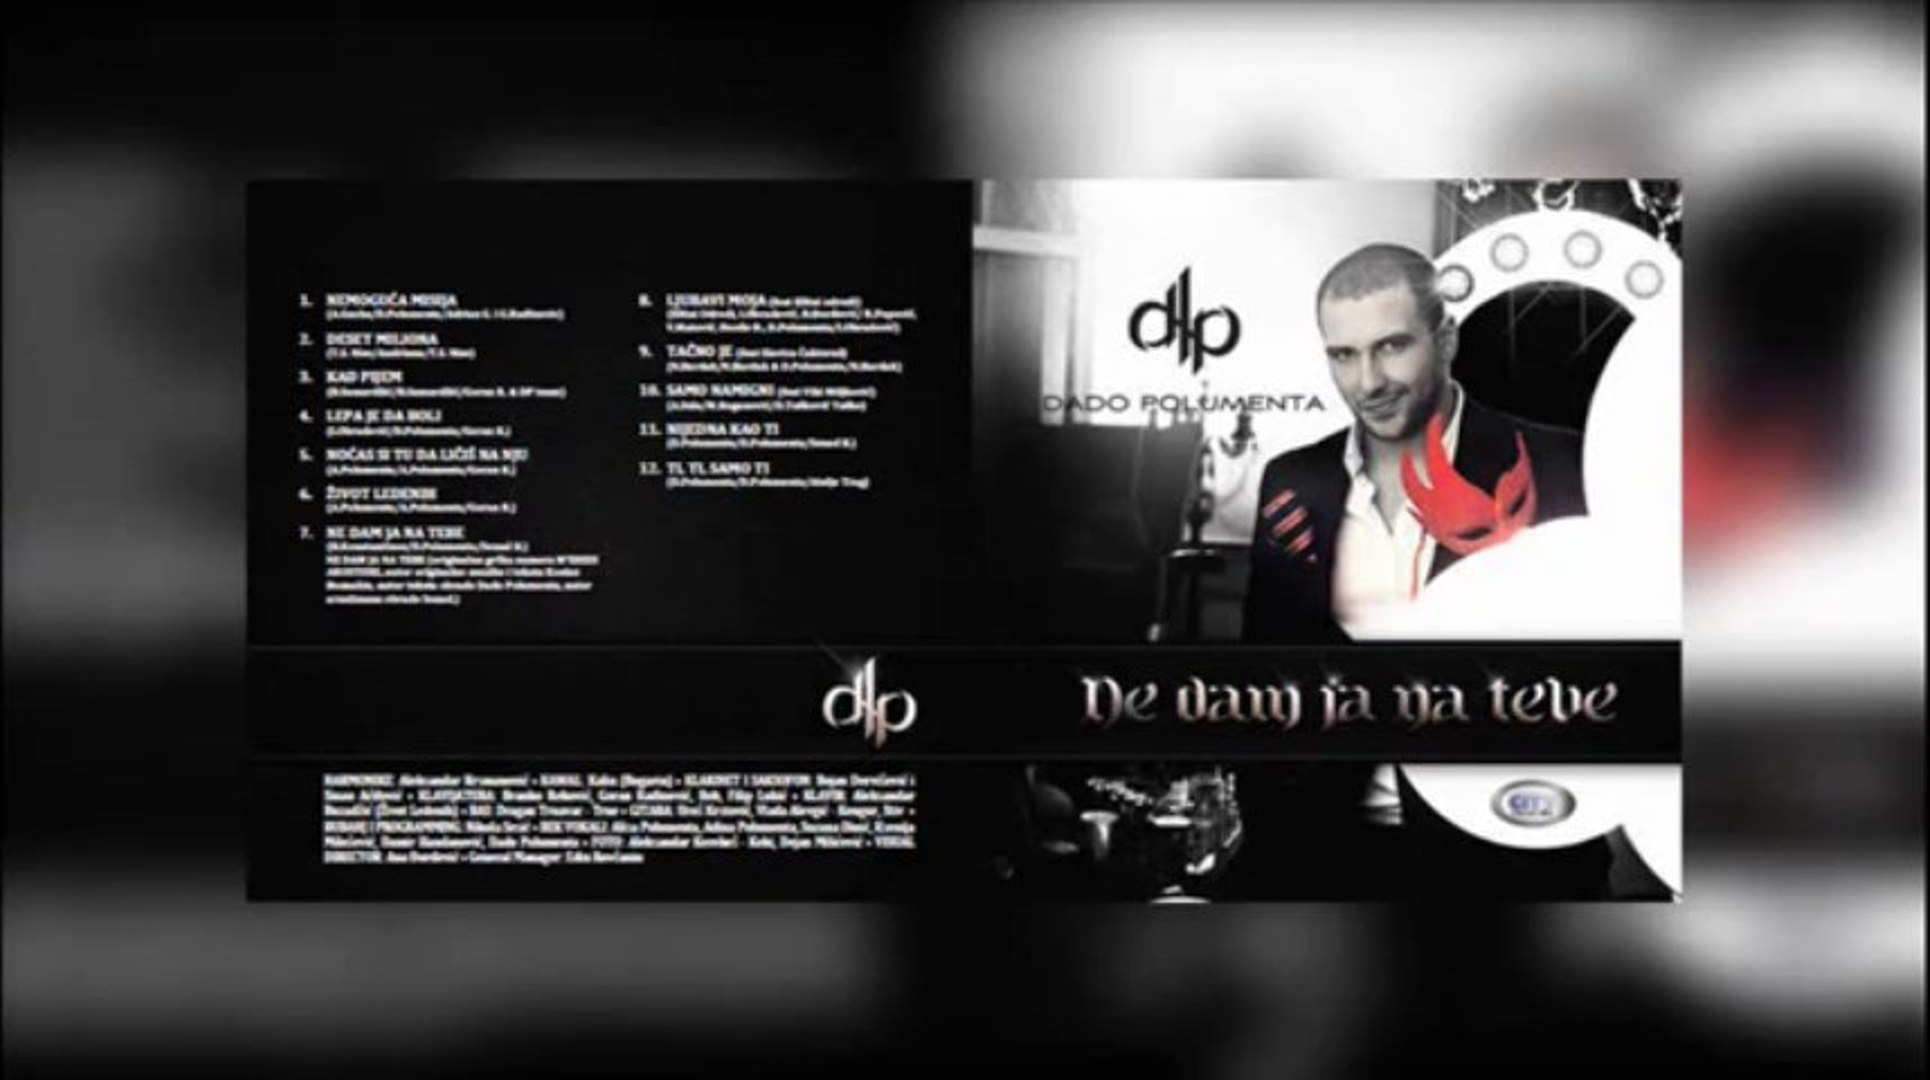 Dado Polumenta-2013-Lepa je da boli (Official Audio) - video Dailymotion